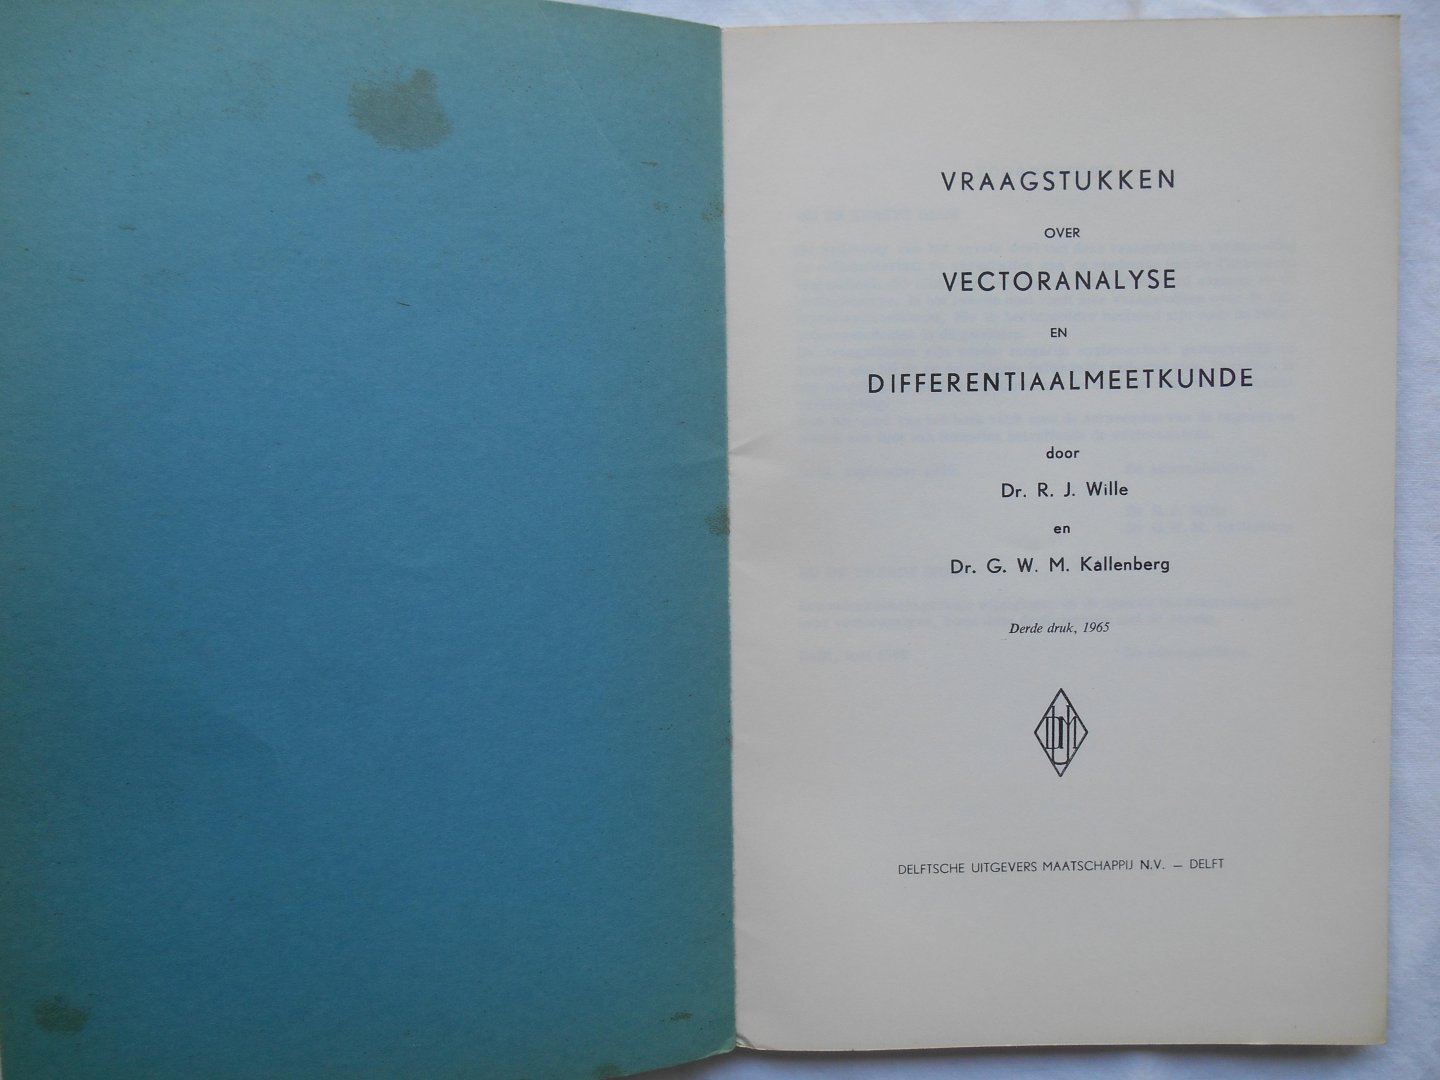 Wille, Dr. R.J. & Kallenberg, Dr. G.W.M. - Vraagstukken over Vectoranalyse en Differentiaalmeetkunde.